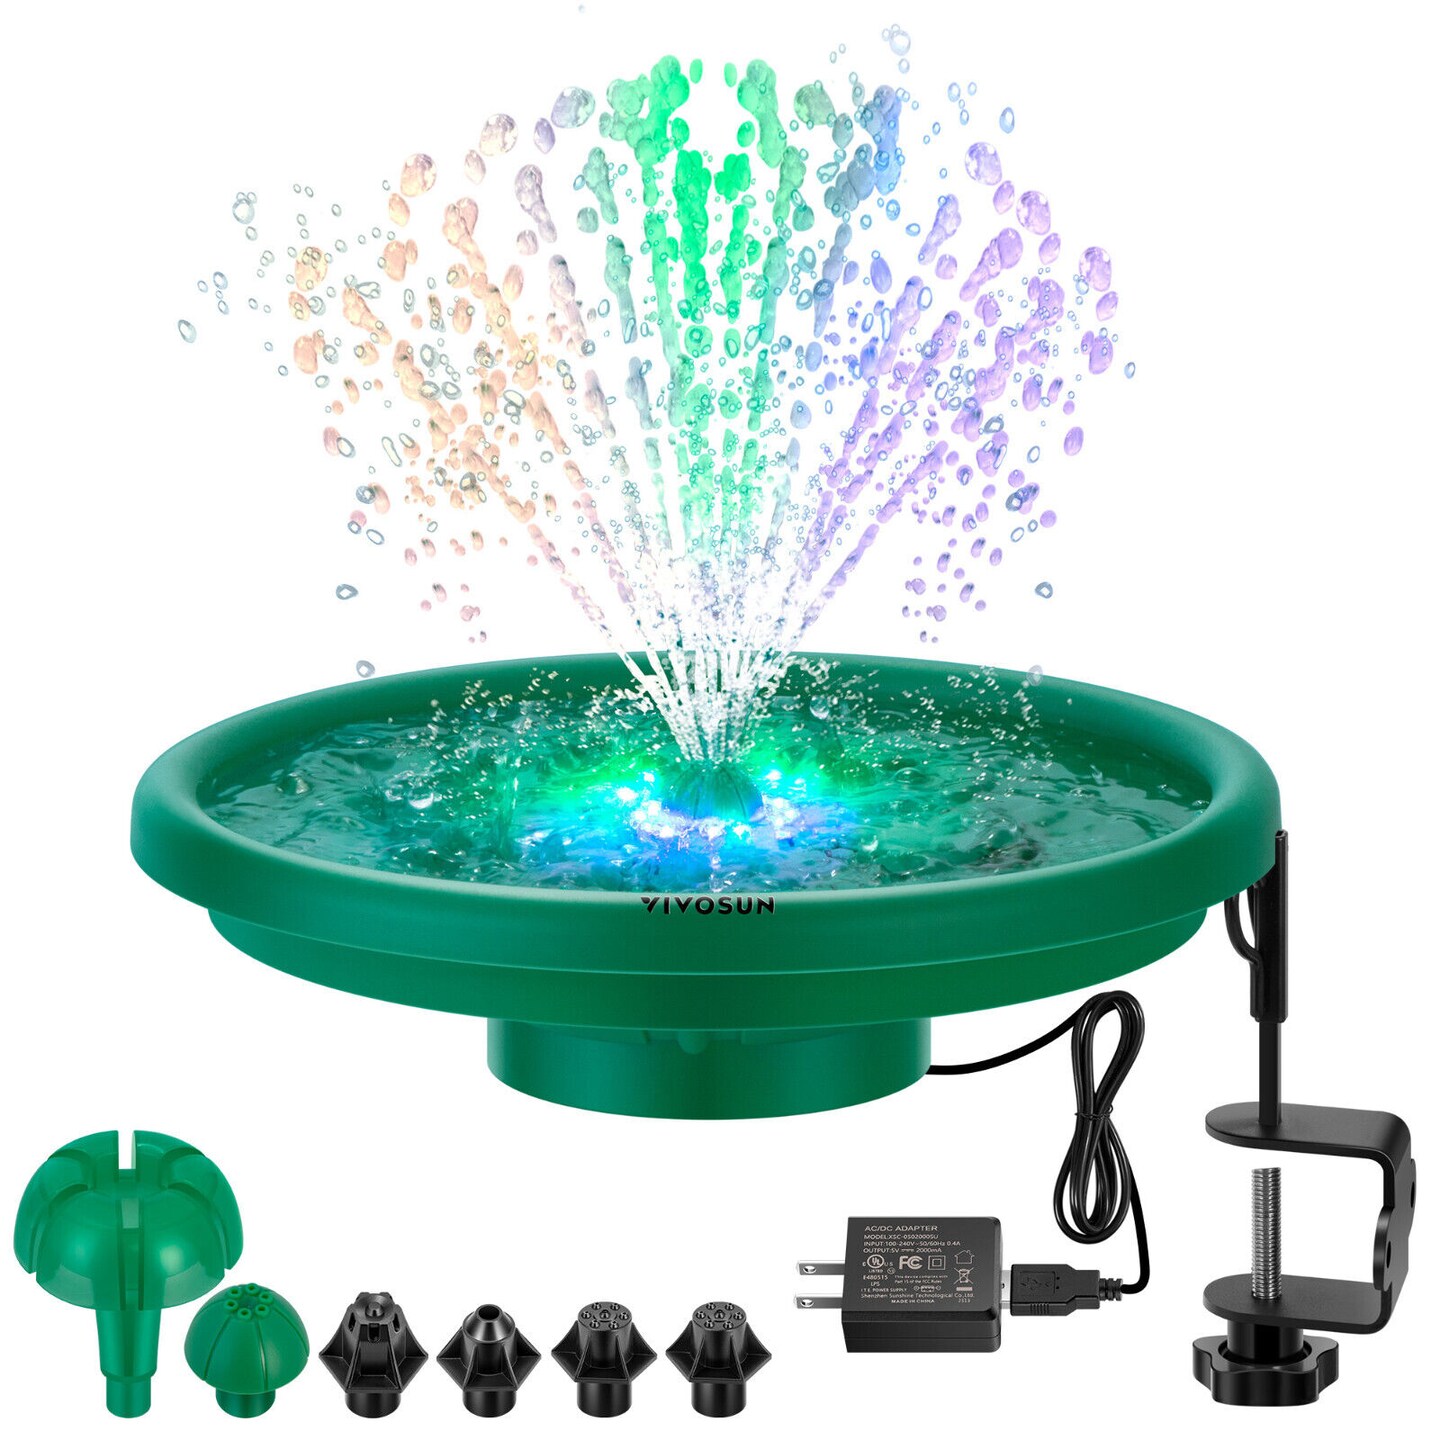 VIVOSUN Powered Fountain Set with 12 Colorful LED Light